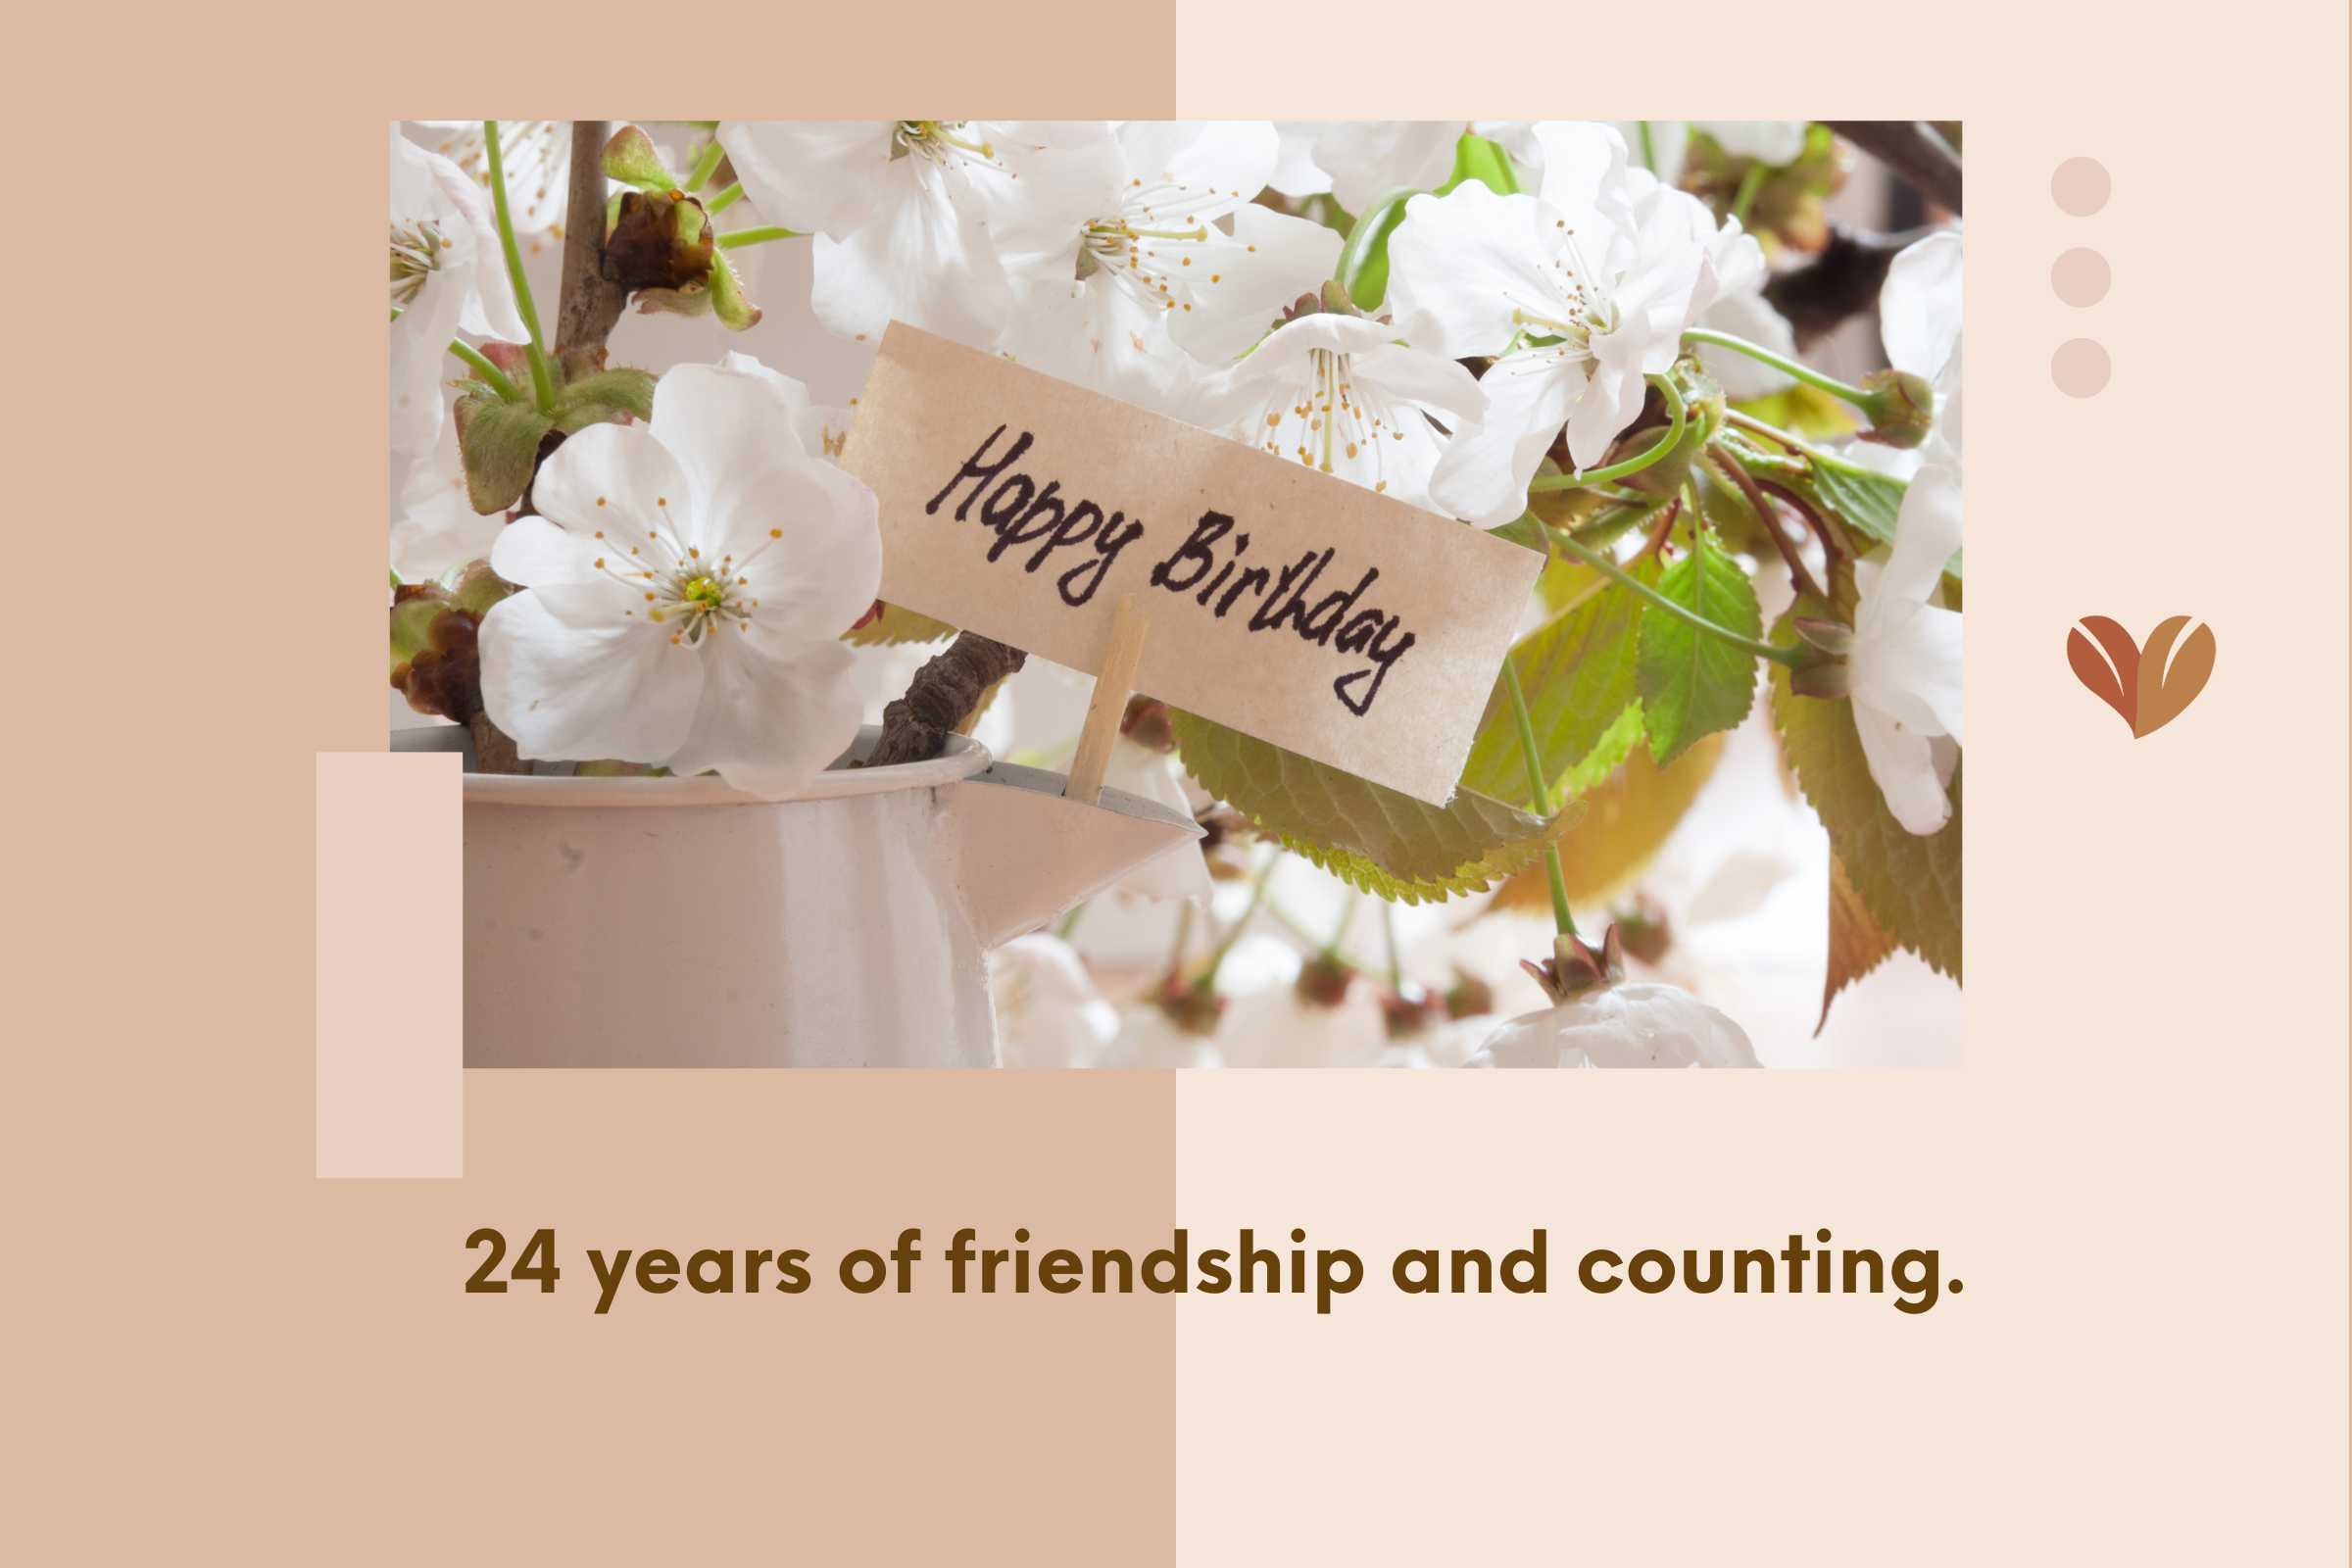 Celebrating 24 years of friendship